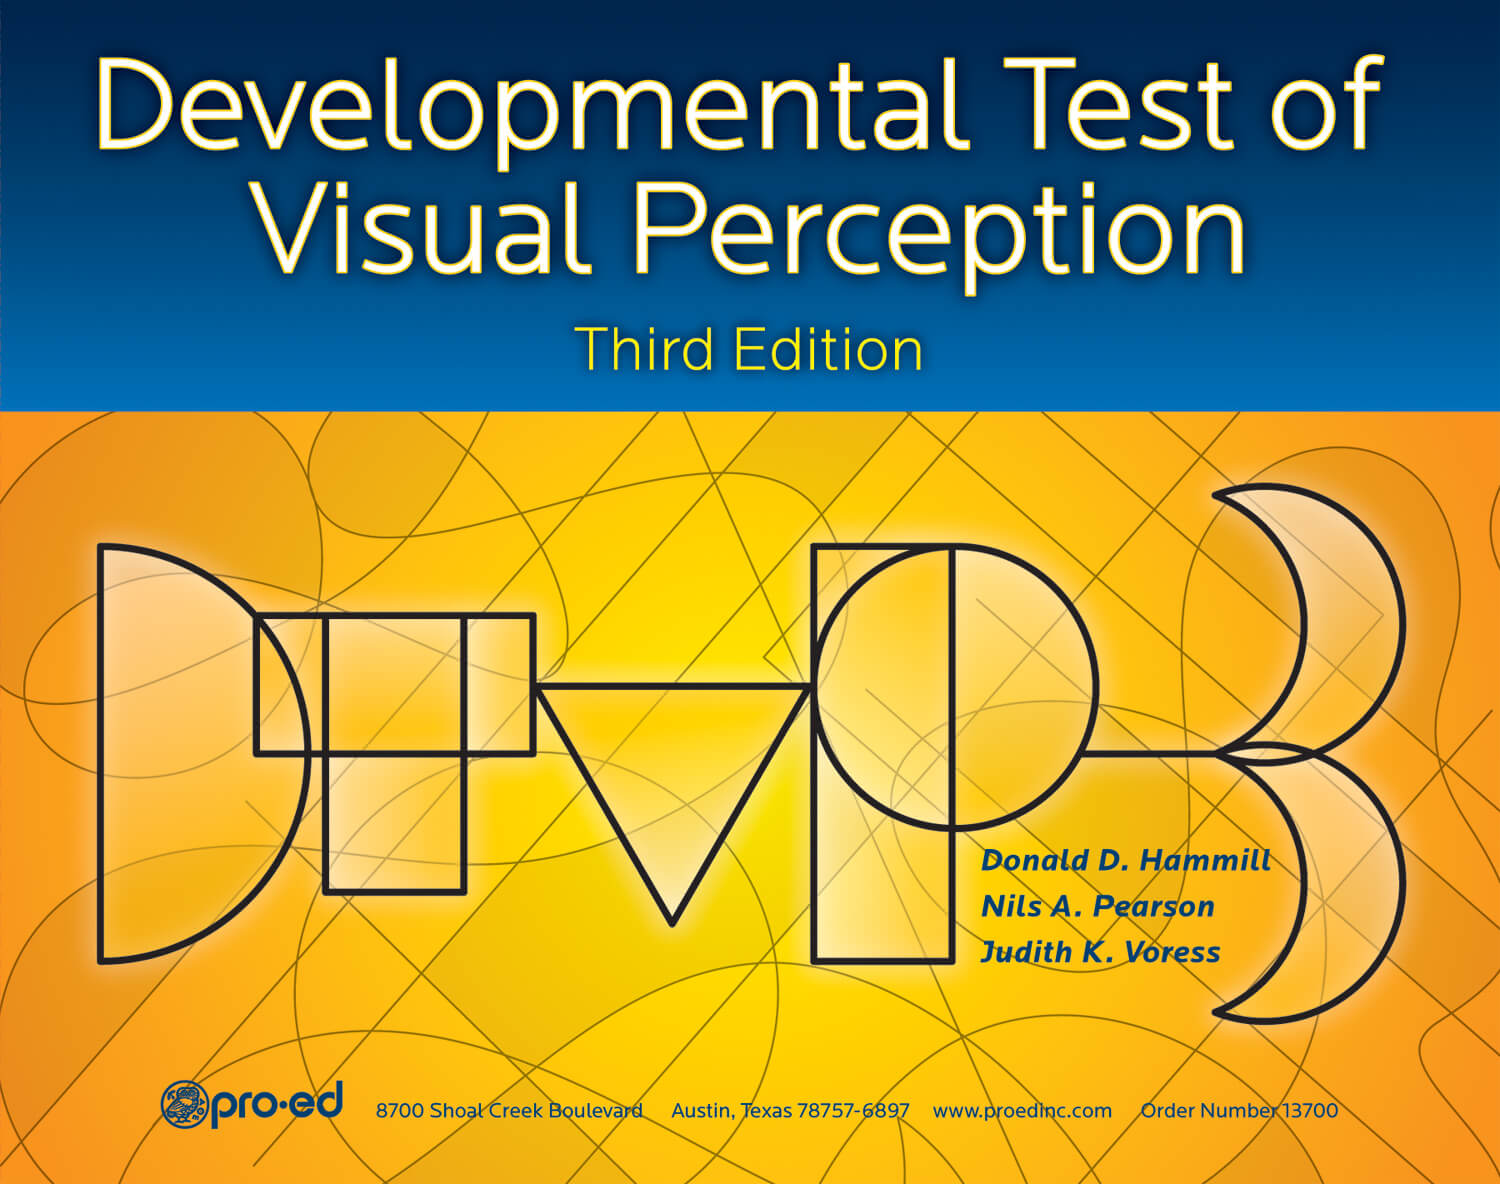 DTVP–3 Developmental Test of Visual Perception 3rd Ed - 